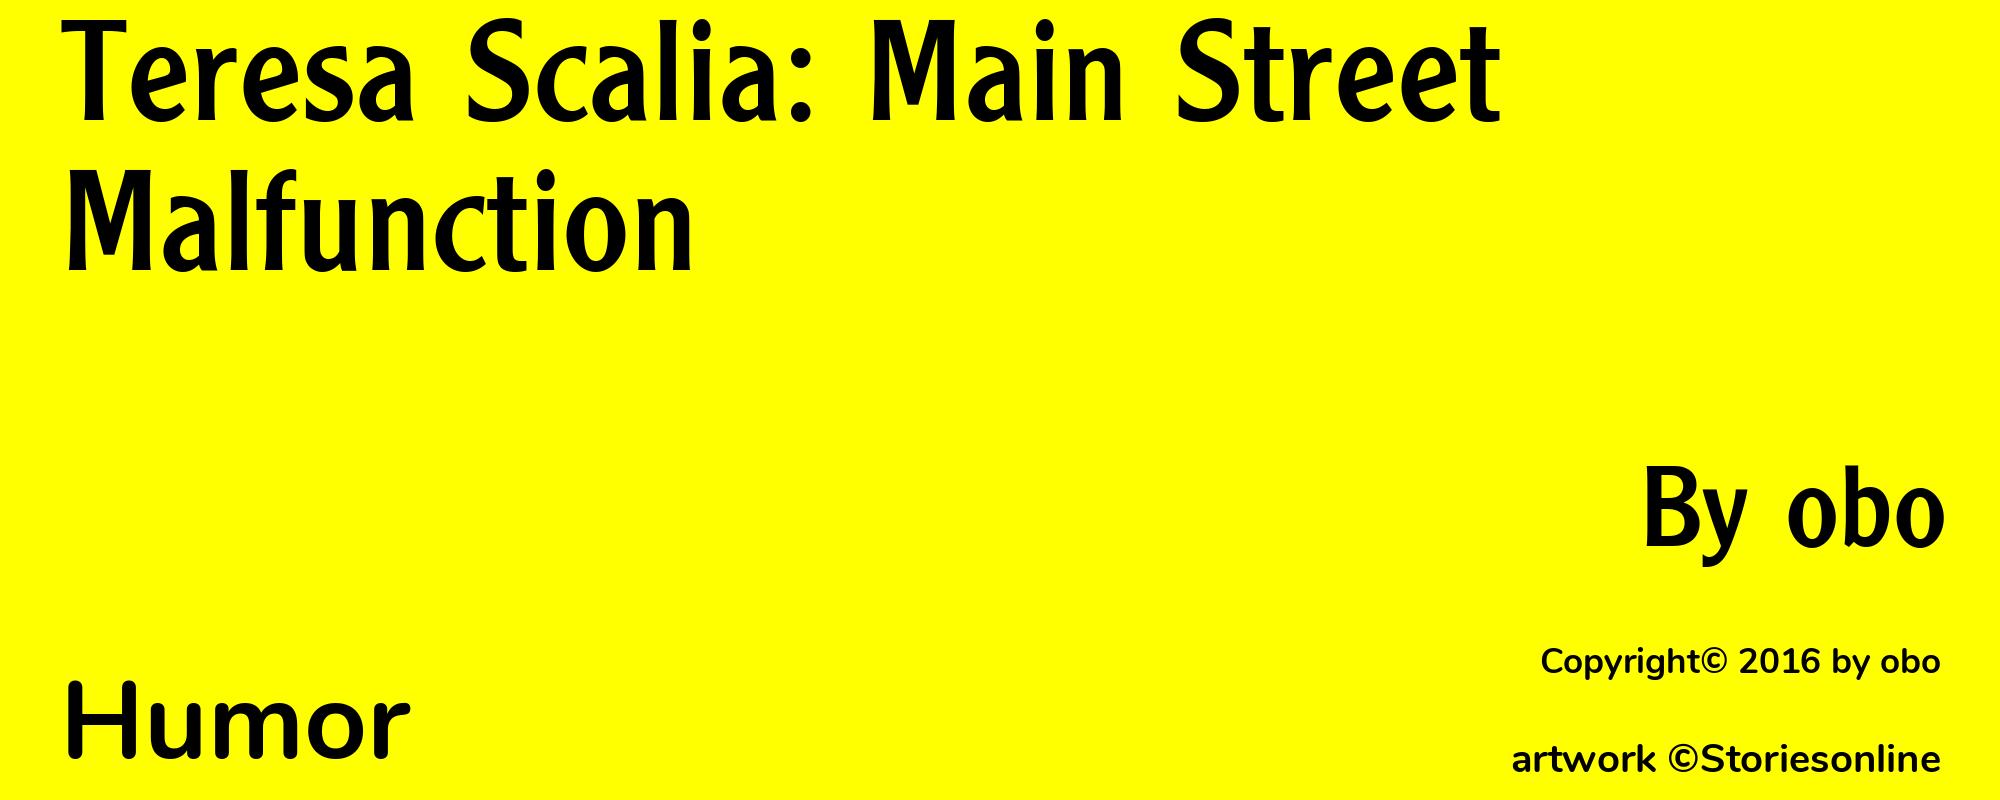 Teresa Scalia: Main Street Malfunction - Cover